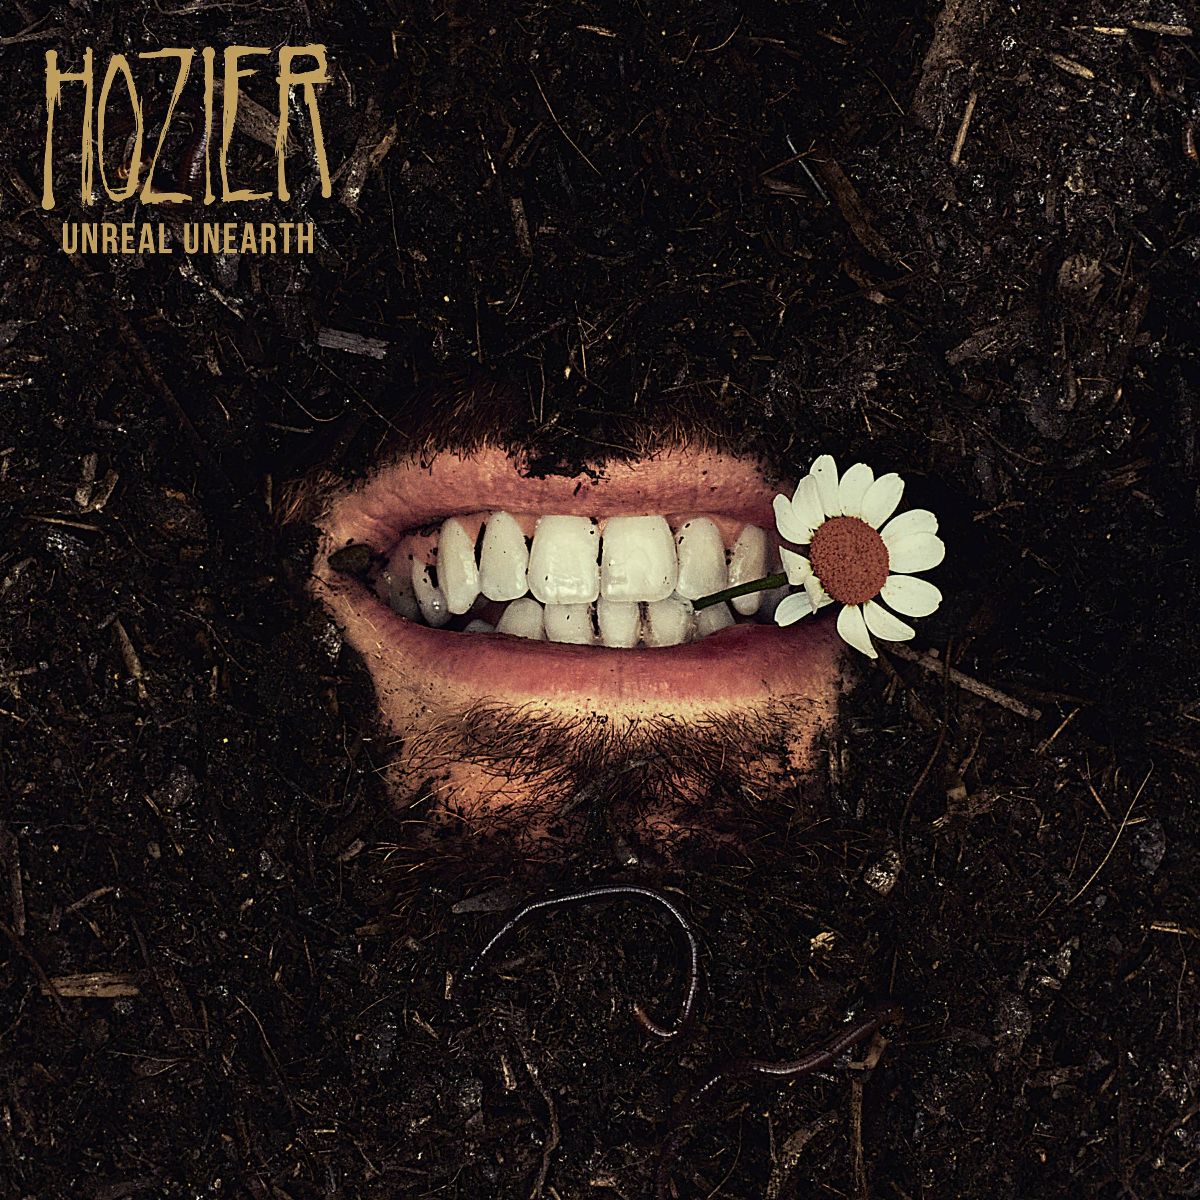 ALBUM REVIEW: Hozier – Unreal Unearth